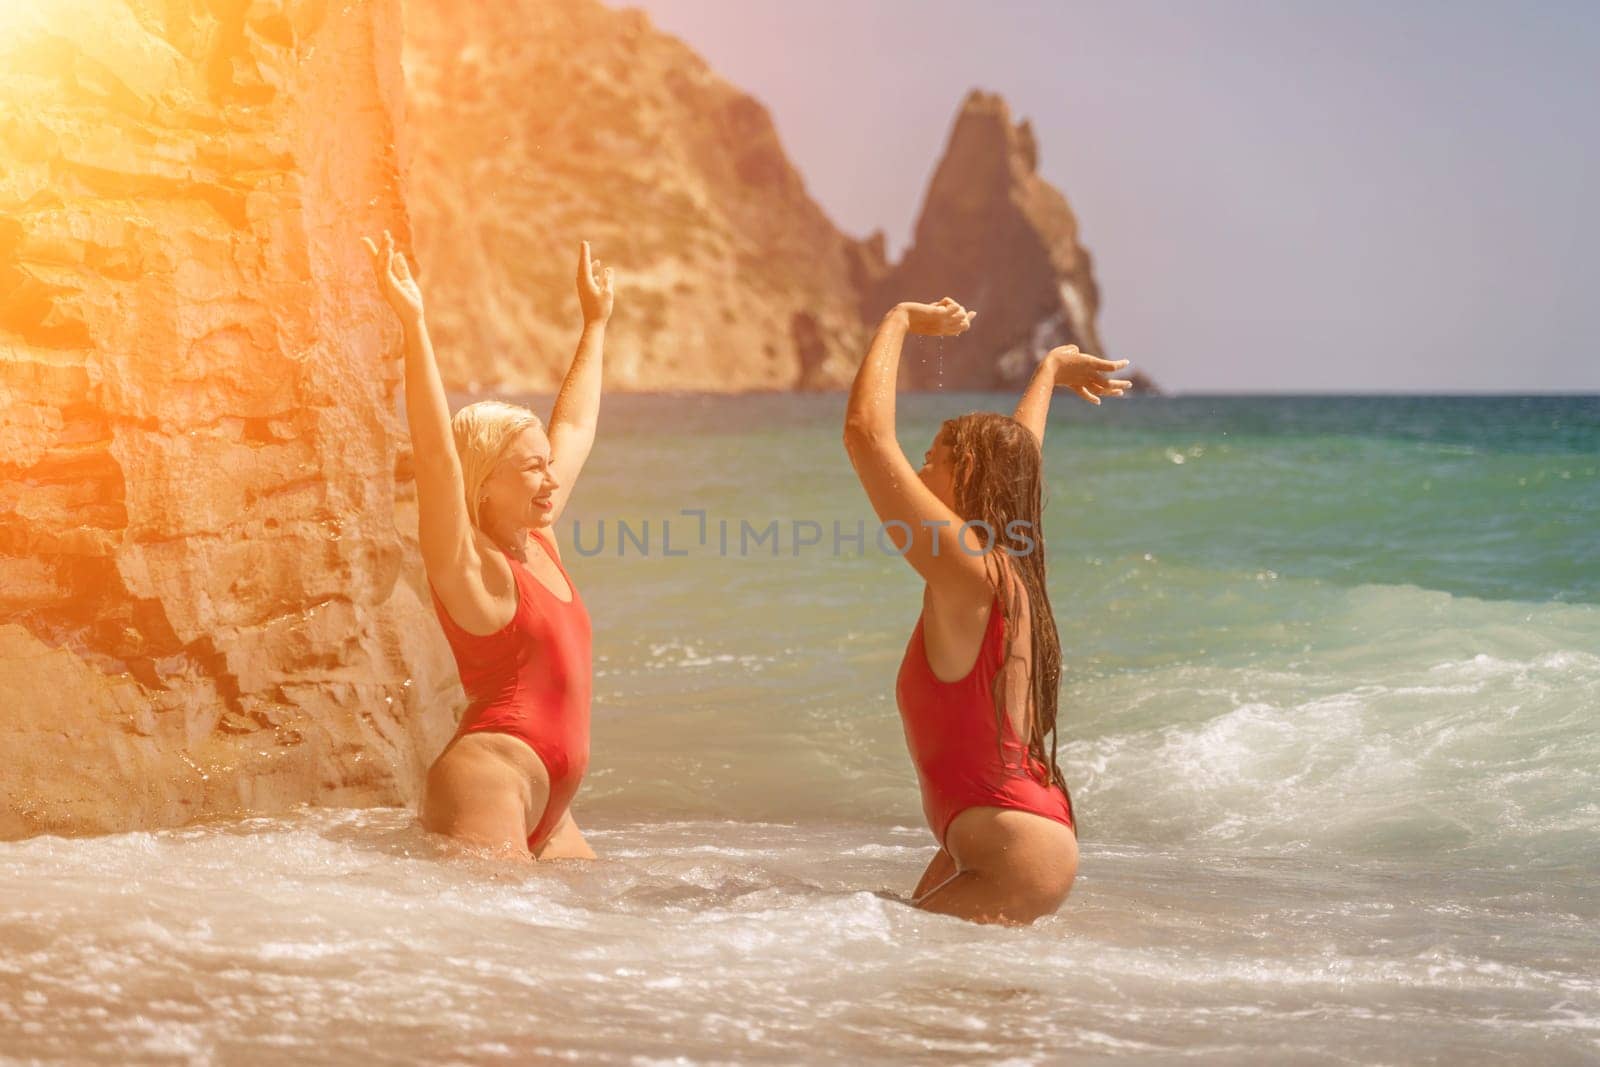 Women Santa hats ocean play. Seaside, beach daytime, enjoying beach fun. Two women in red swimsuits and Santa hats are enjoying themselves in the ocean waves and raising their hands up. by Matiunina